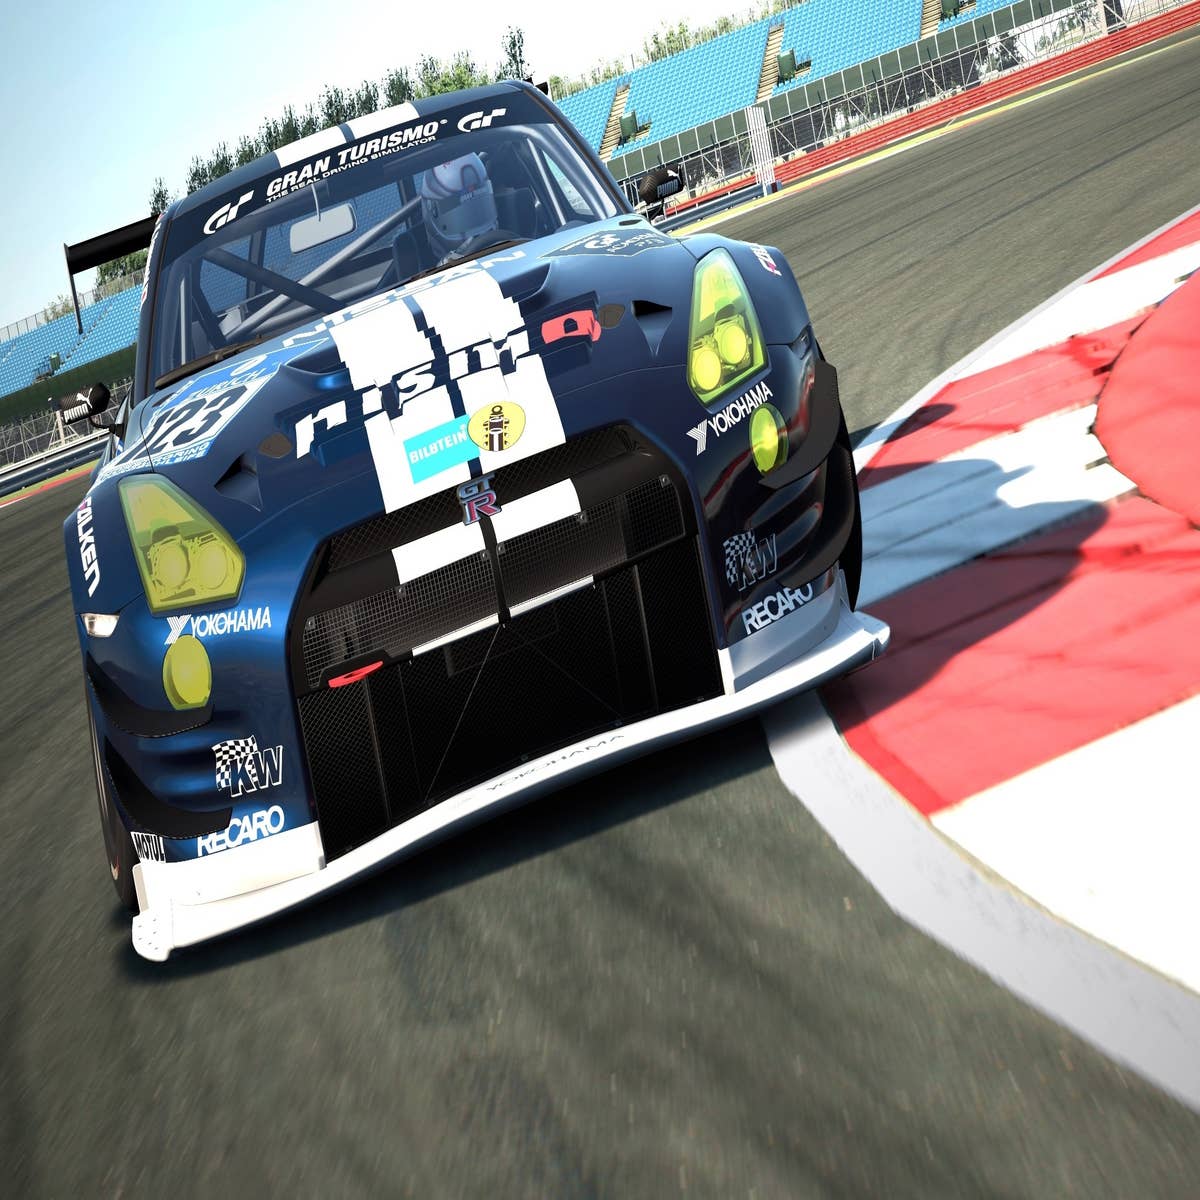 Gran Turismo 5: New Free Updates, DLC, and Price Drop – PlayStation.Blog